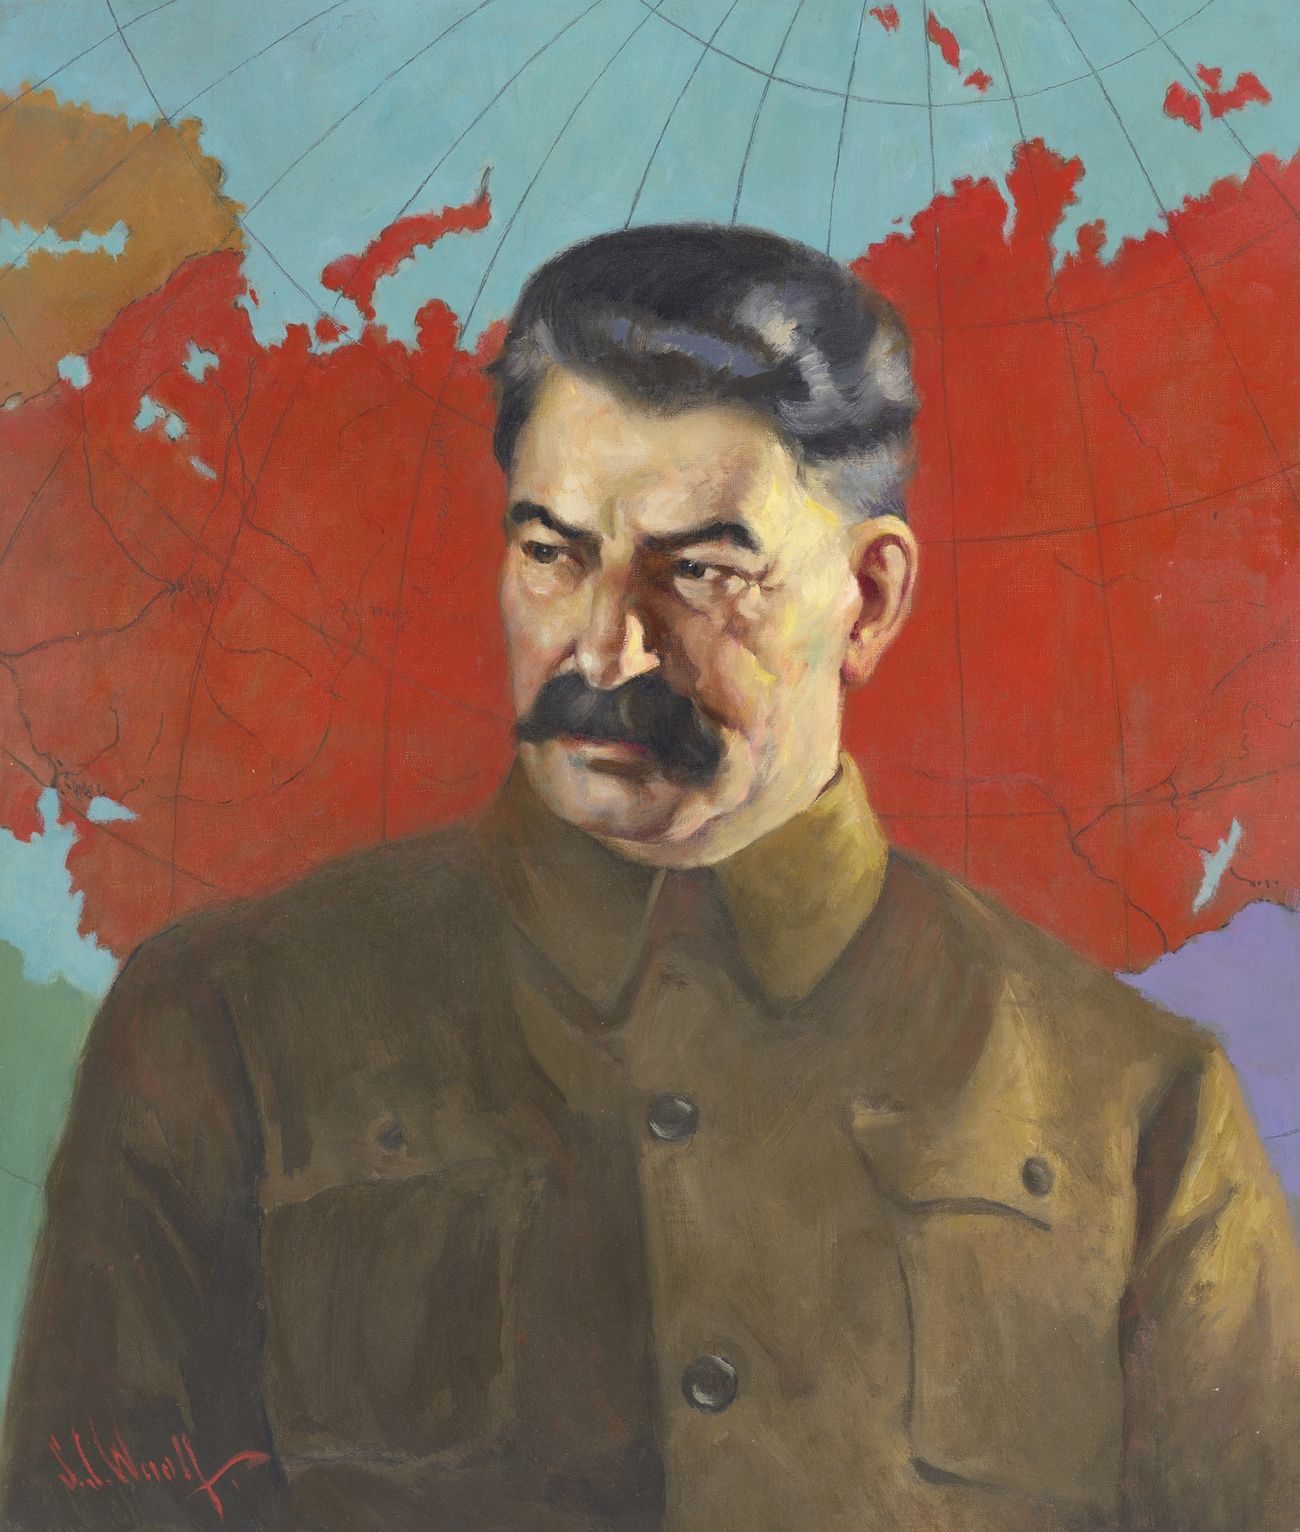 Unbelievable 10 Ways Stalin Under USSR Destroyed the Lives of Millions of Ukrainians